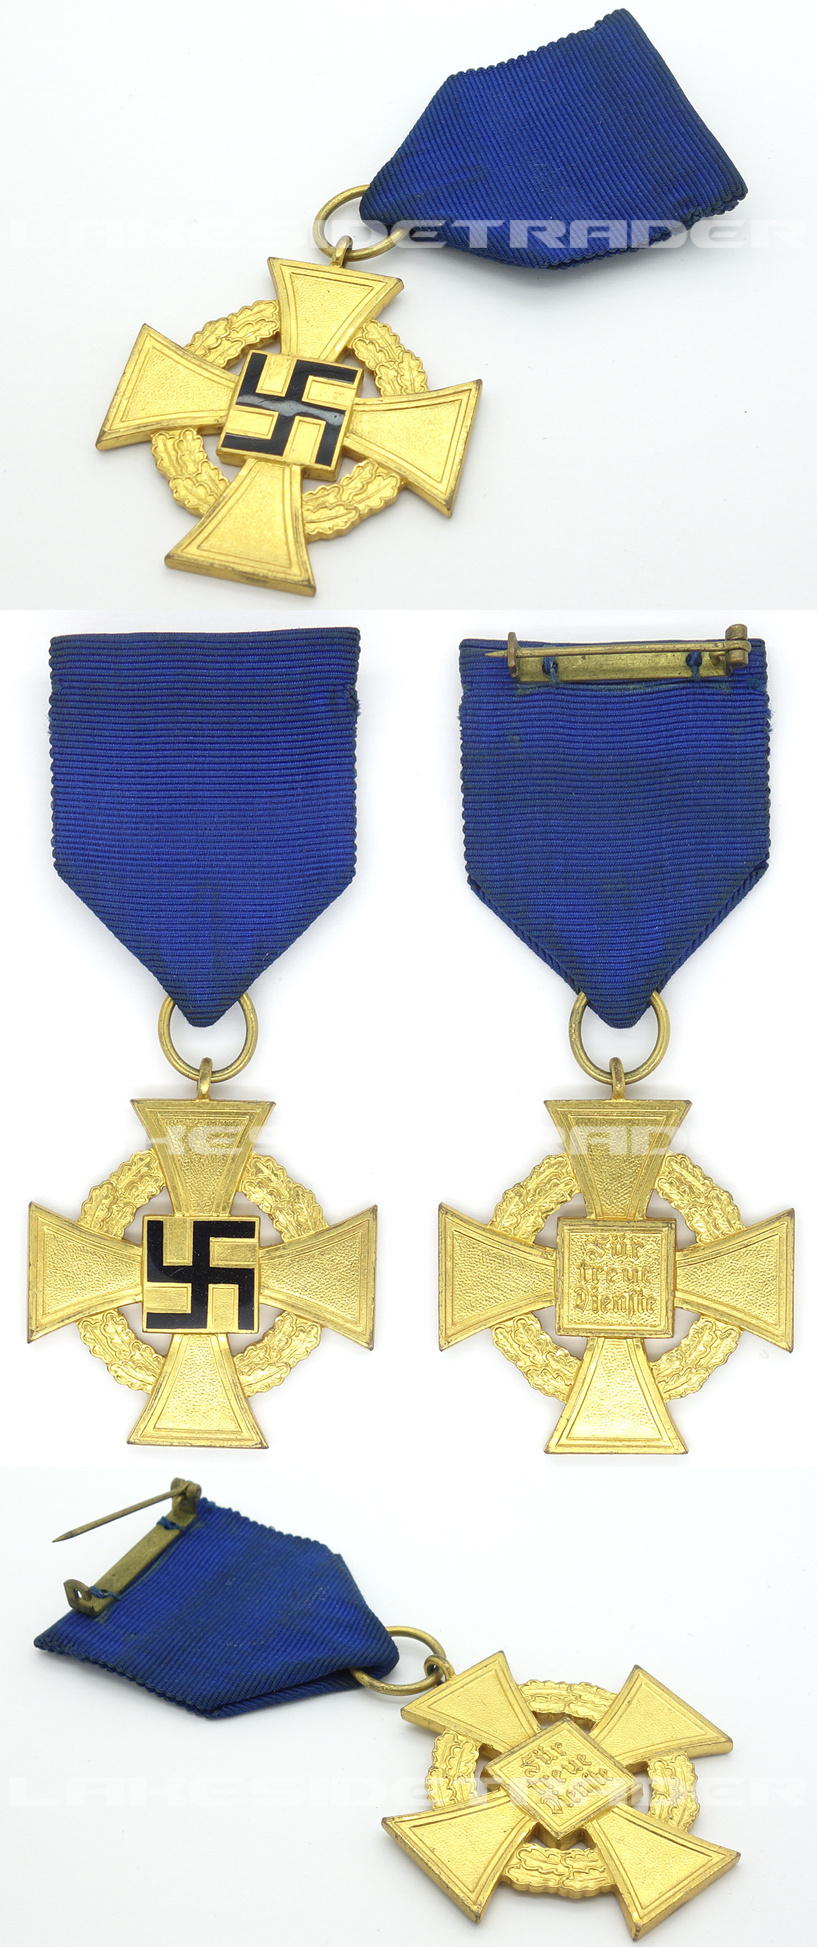 NSDAP 40 Year Faithful Service Cross